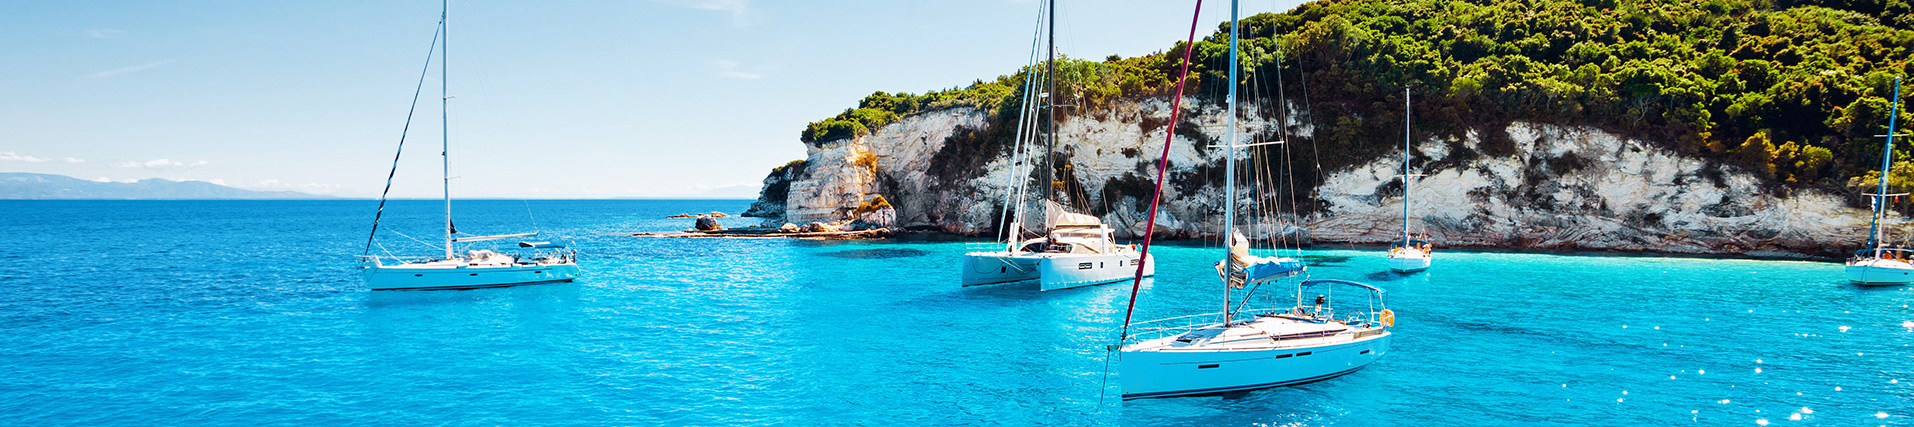 Sailboats charter in Greece